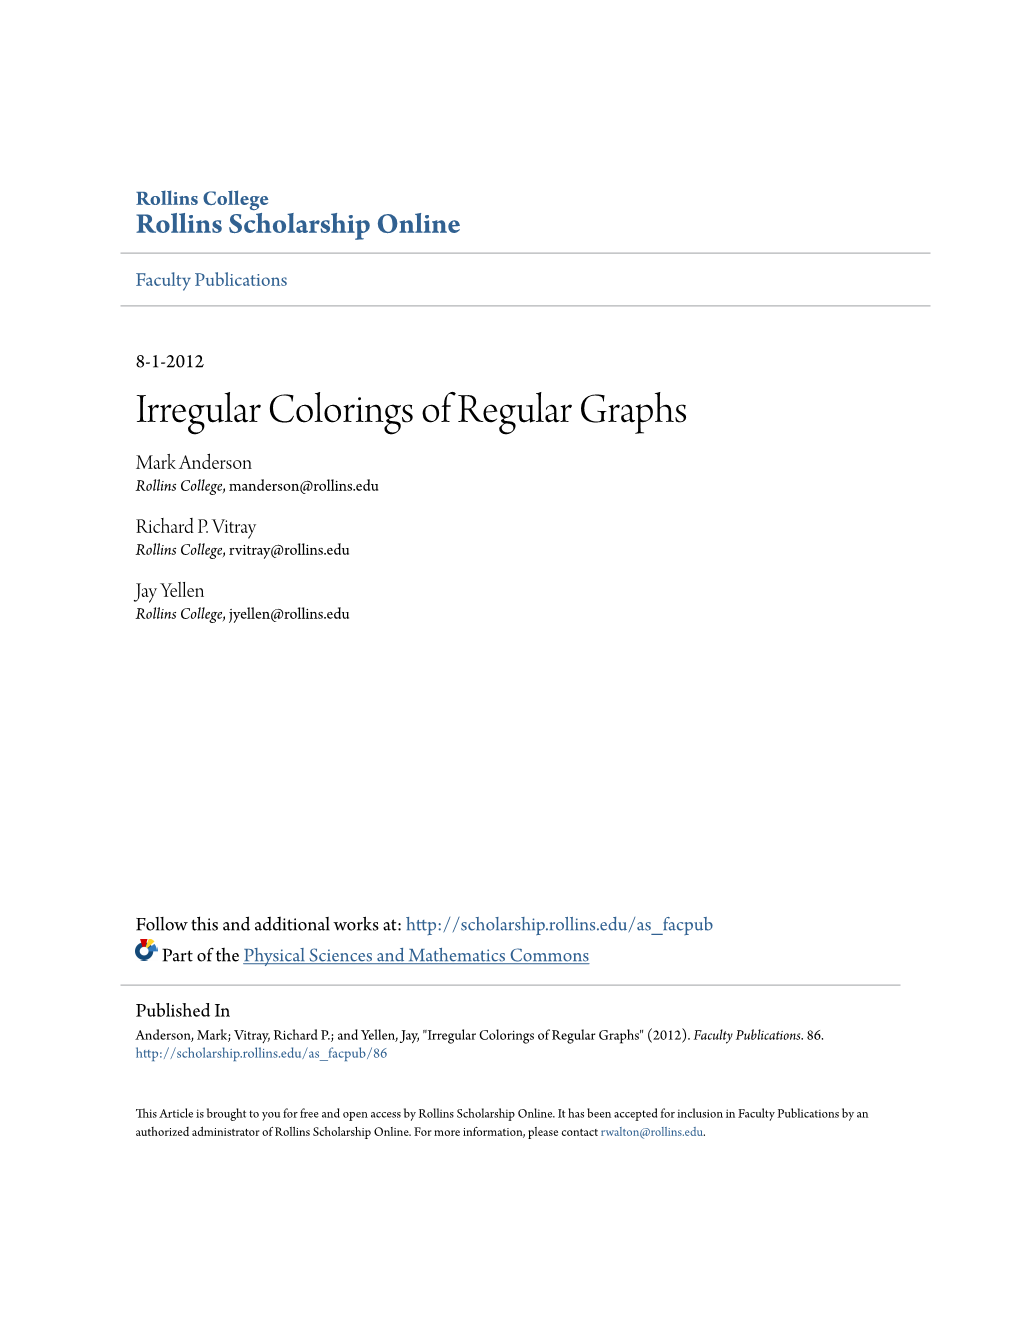 Irregular Colorings of Regular Graphs Mark Anderson Rollins College, Manderson@Rollins.Edu